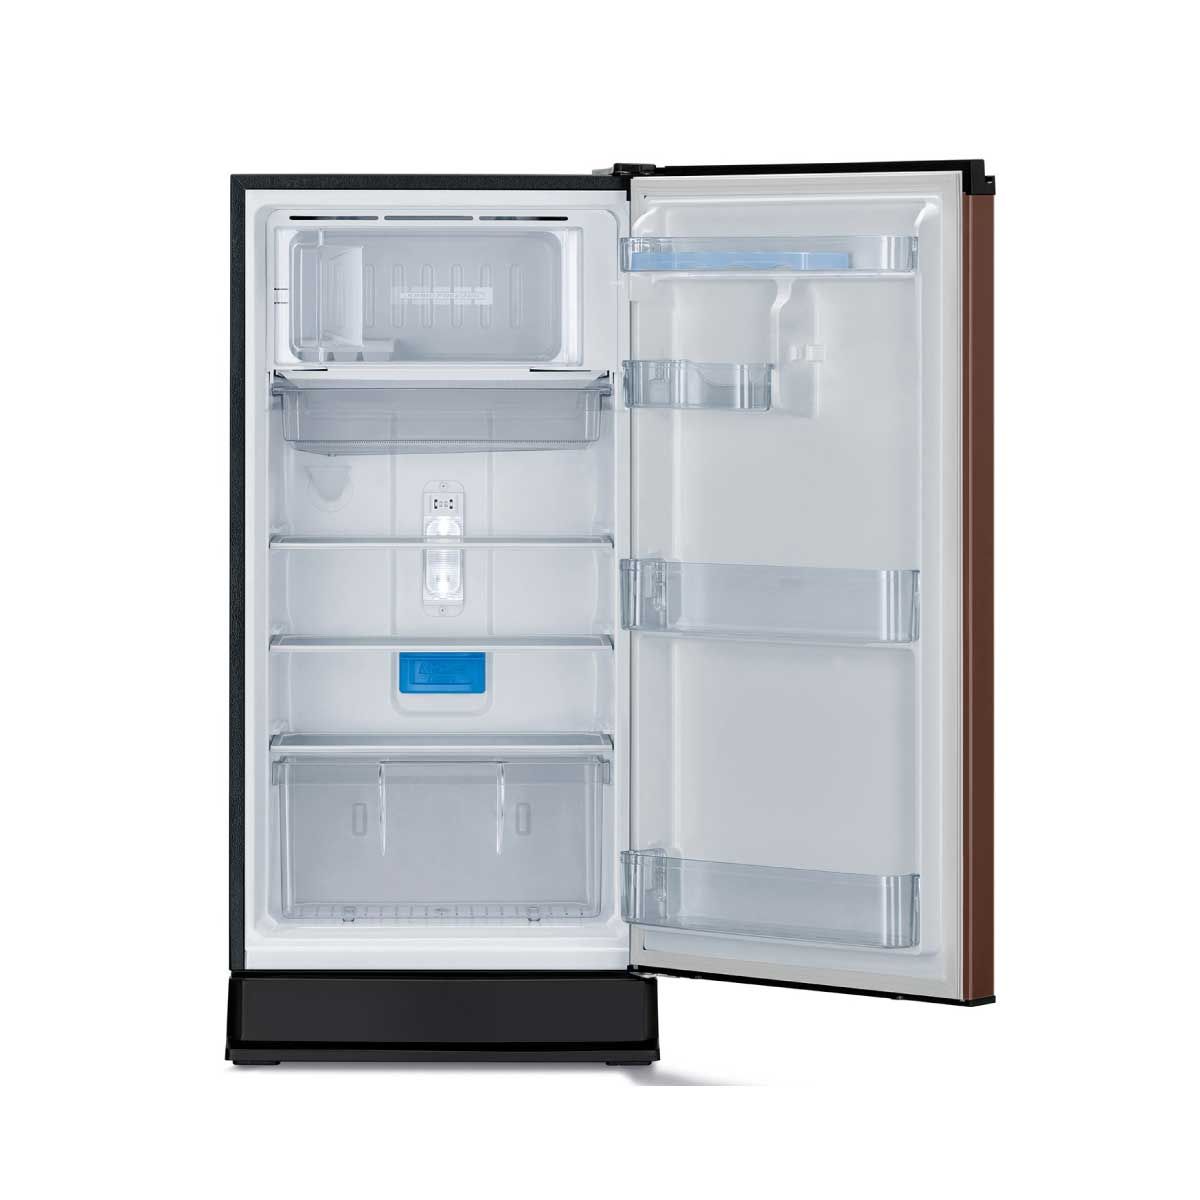 MITSUBISHI ELECTRIC ตู้เย็น1ประตู J-SMART DEFROST 5.8Q สีน้ำตาล รุ่นMR-17TJA